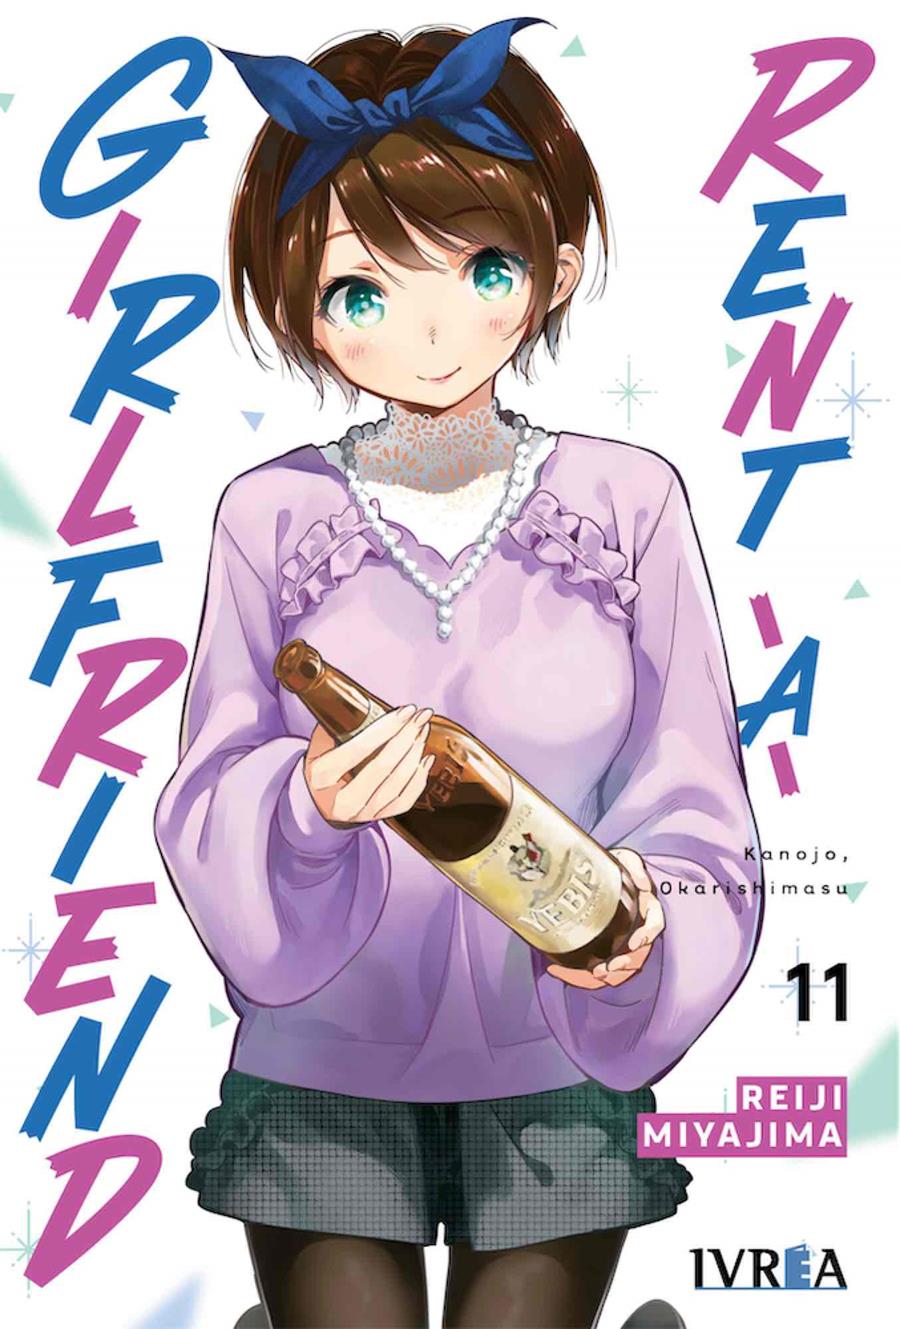 Rent-a-girlfriend 11 | N0322-IVR12 | Reiji Miyajima | Terra de Còmic - Tu tienda de cómics online especializada en cómics, manga y merchandising